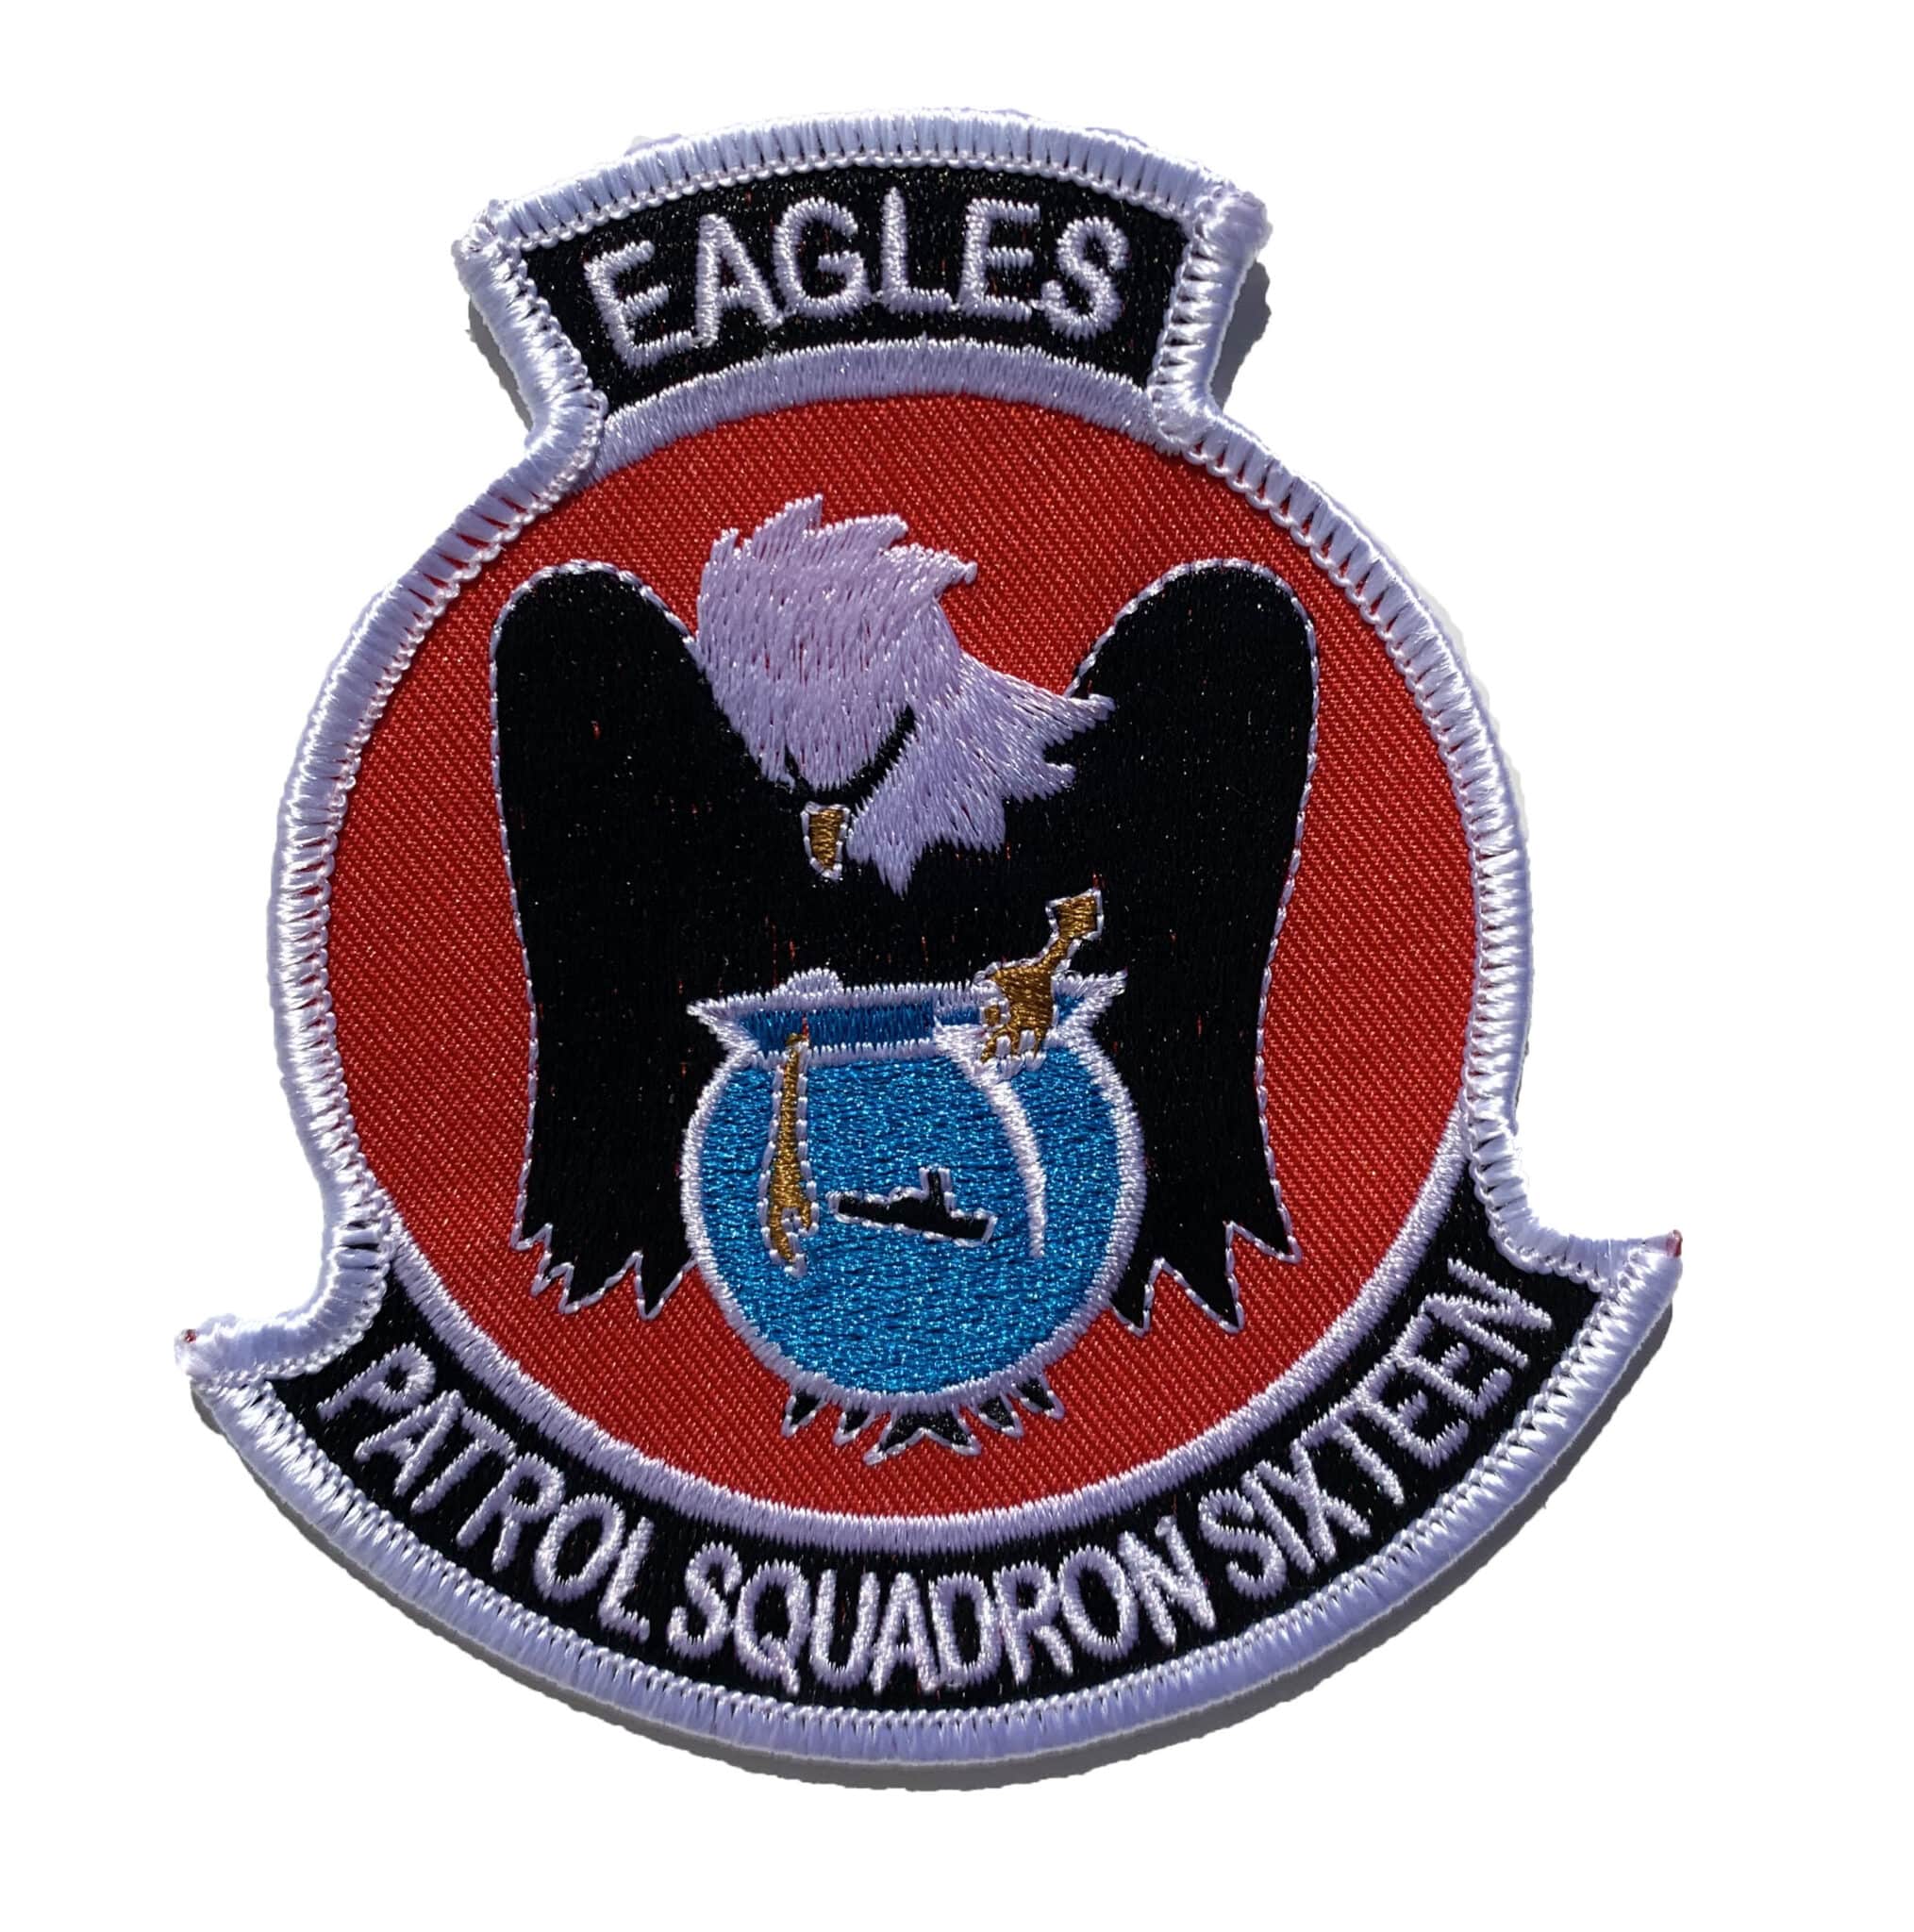 VP-16 War Eagles Squadron Patch – Plastic Backing